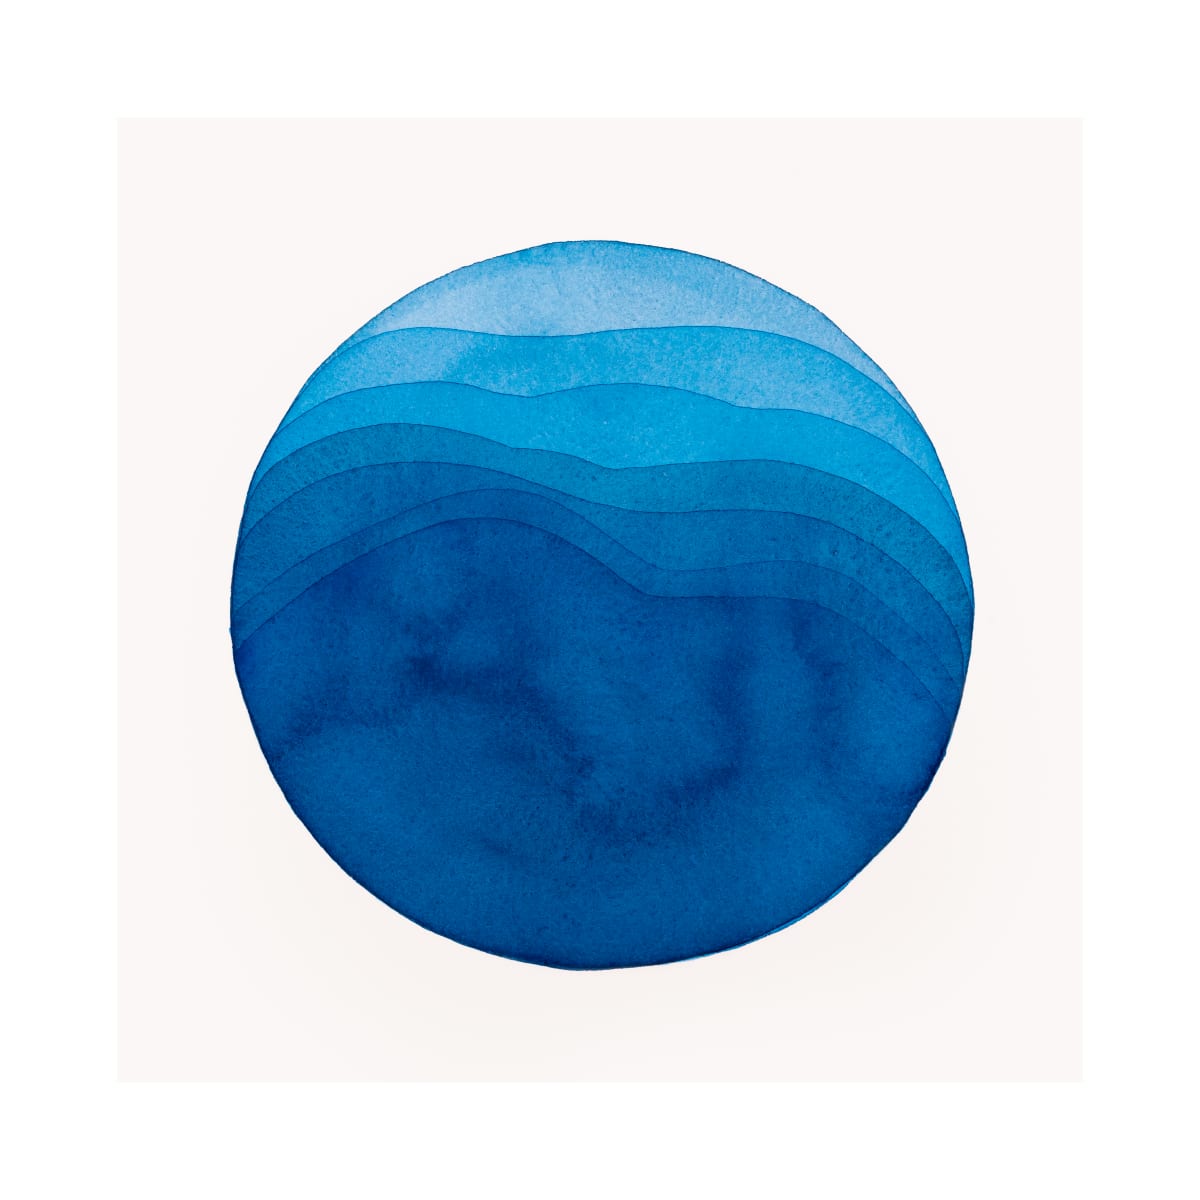 Meditation Blue Moon  Waves Portal  Image: Watercolor blue moon waves portal. 12 x 12 inches on Arches archival paper.